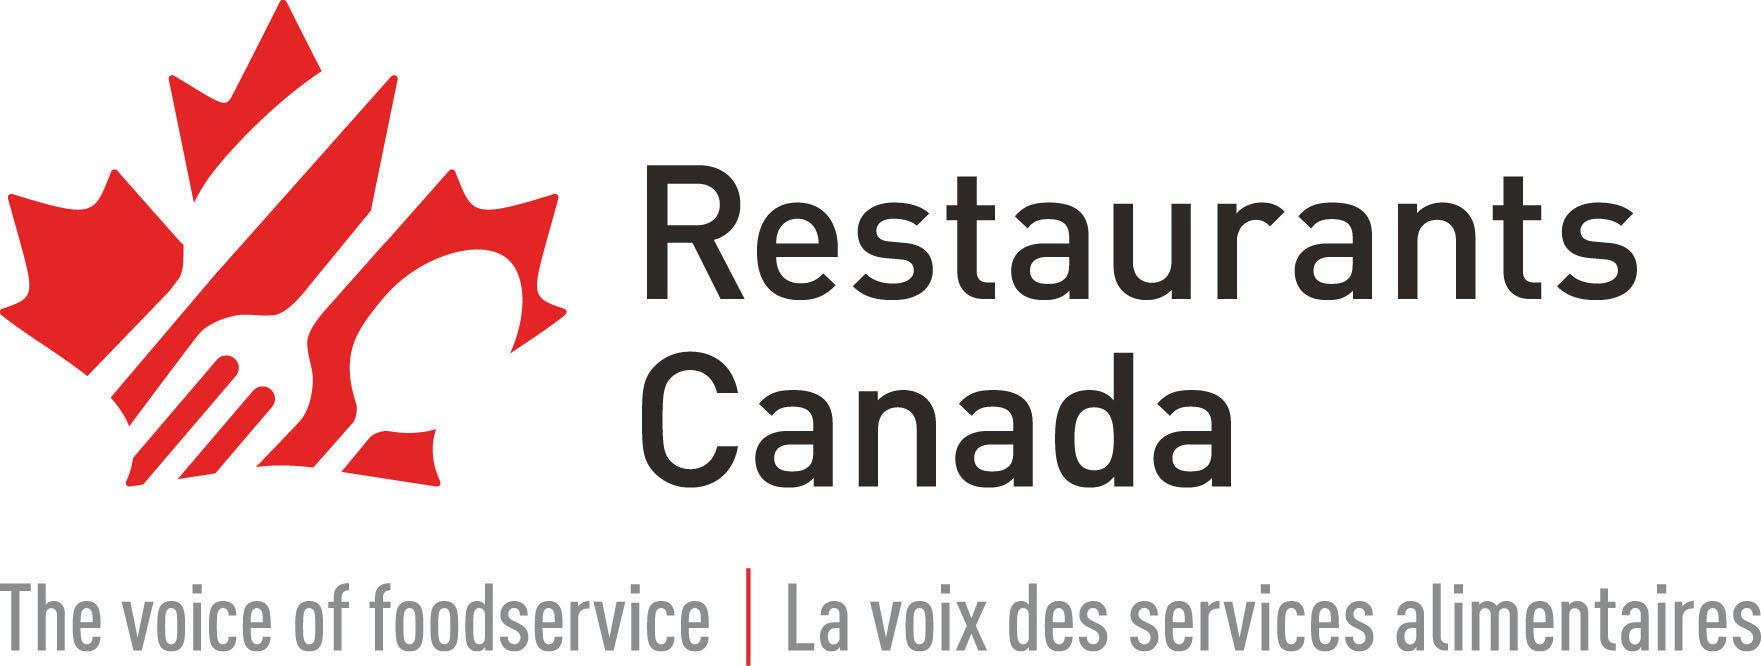 Restaurants Canada R